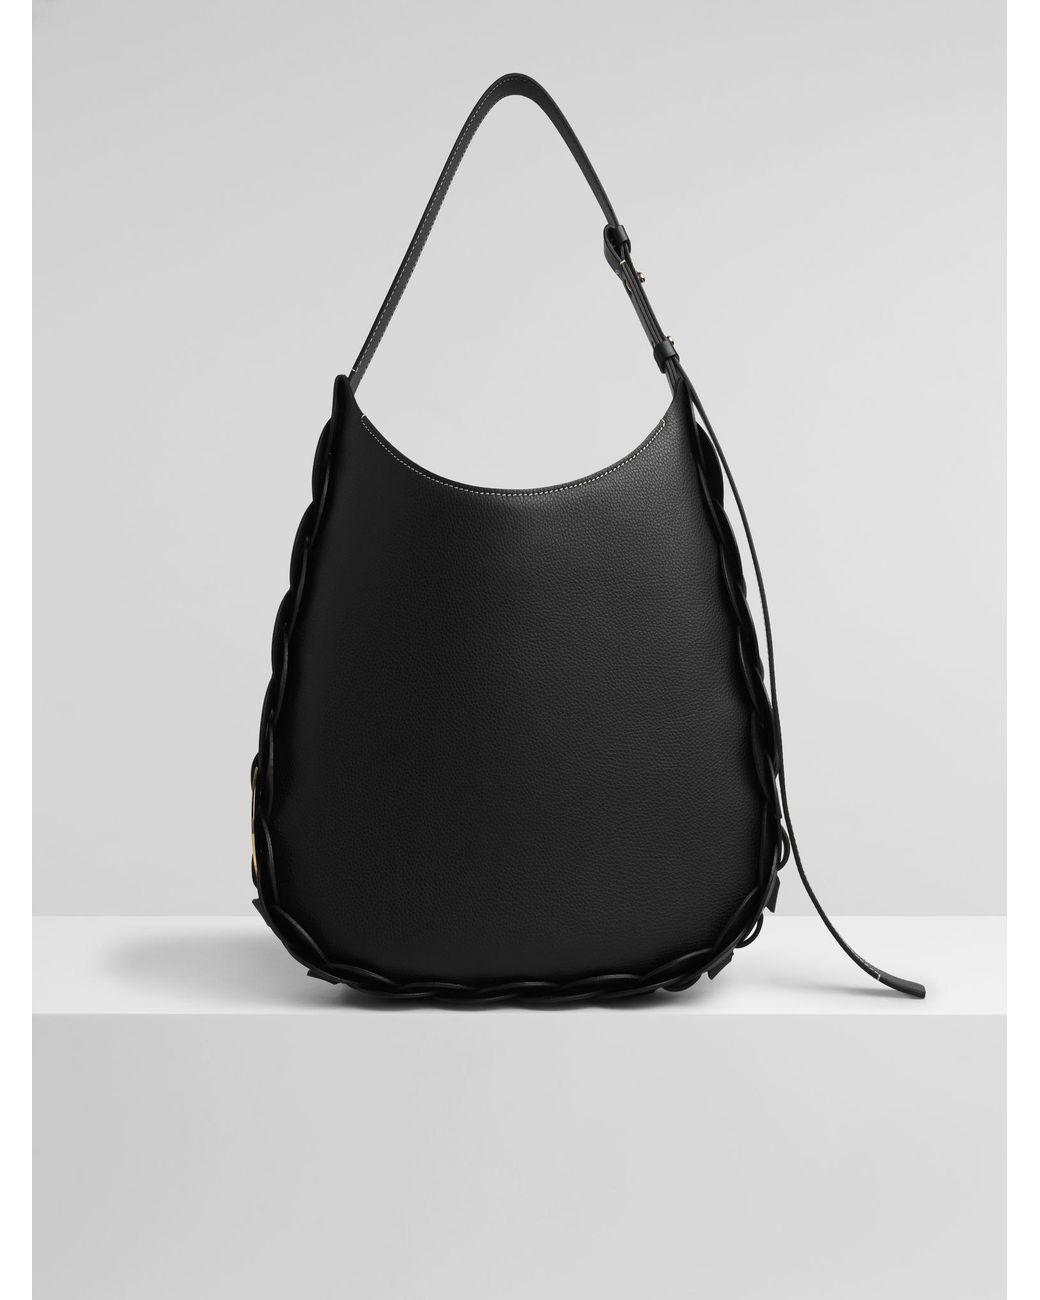 Chloé Medium Darryl Bag in Black | Lyst UK